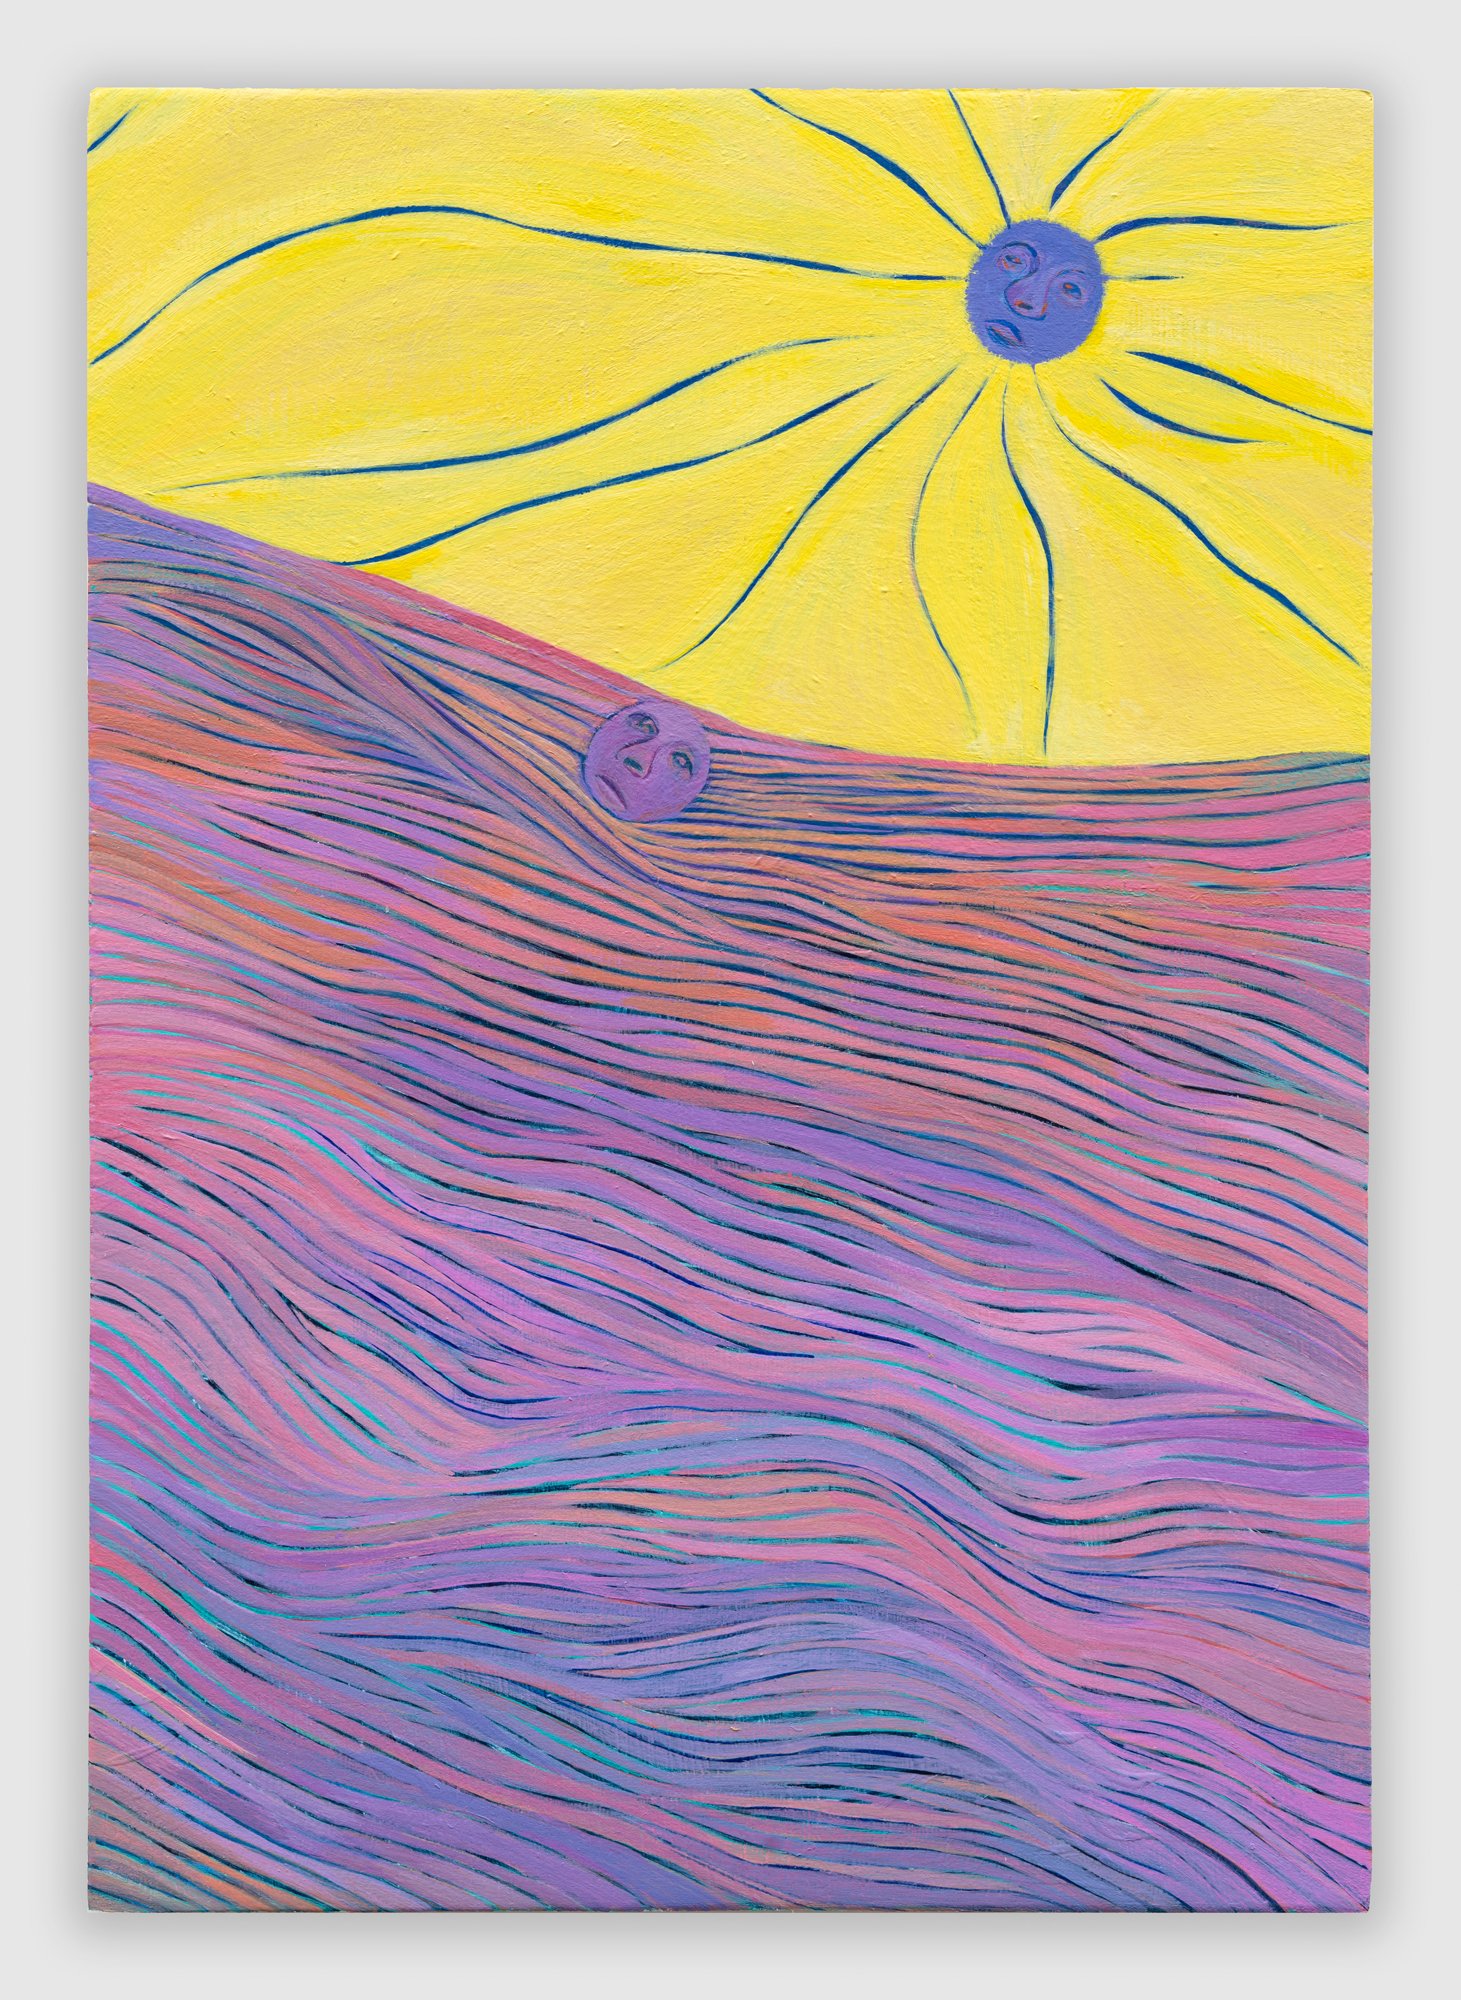    Marisol    Acrylic on panel  7 x 5 x .75 inches 